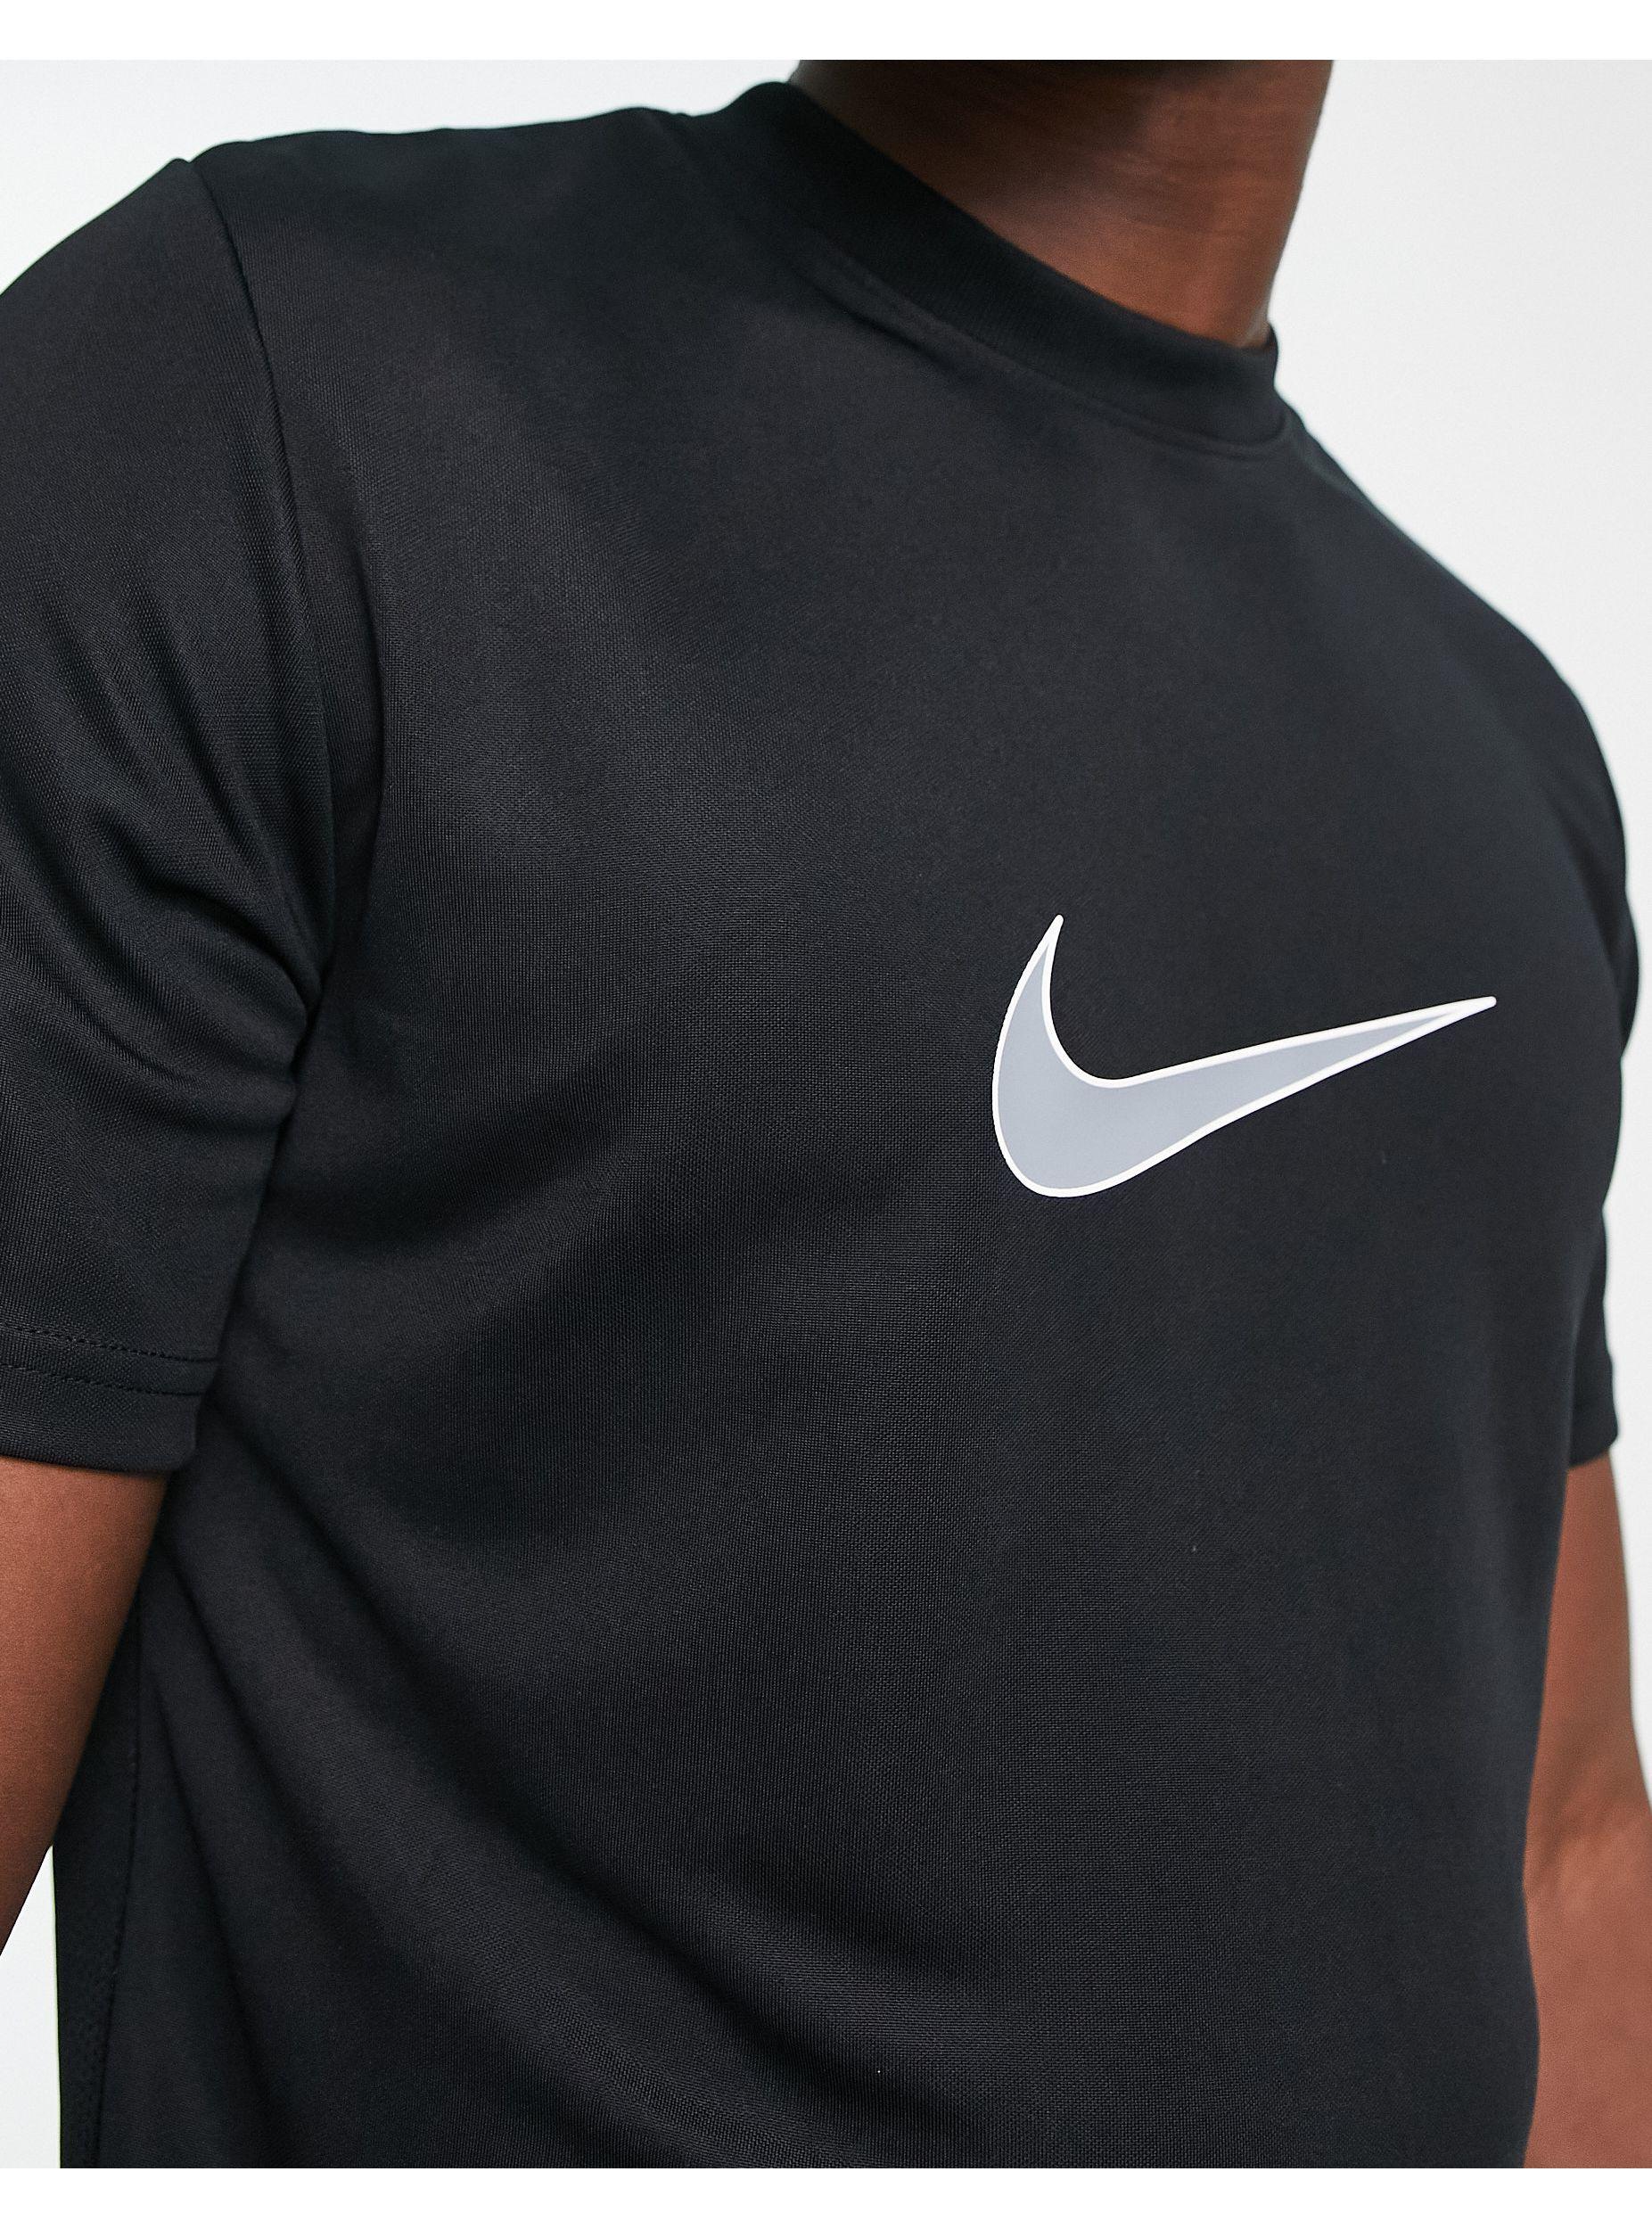 Maori Conceit Monetair Nike Football Academy Dri-fit Top in Black for Men | Lyst